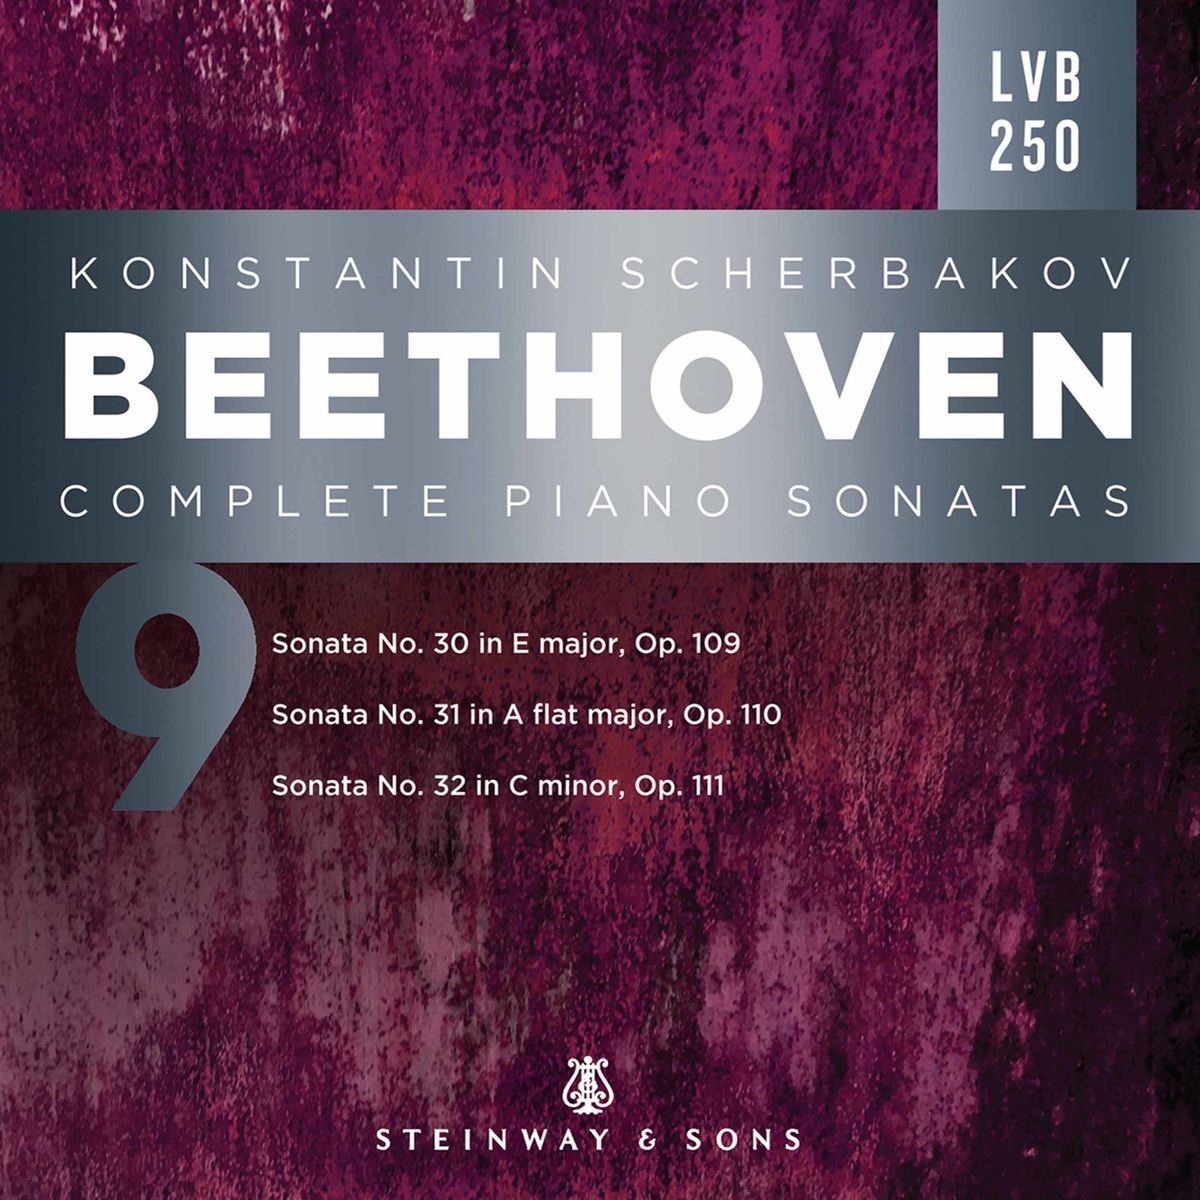 Konstantin Scherbakov – Beethoven: Complete Piano Sonatas, Vol. 9 (2020) [FLAC 24bit/96kHz]